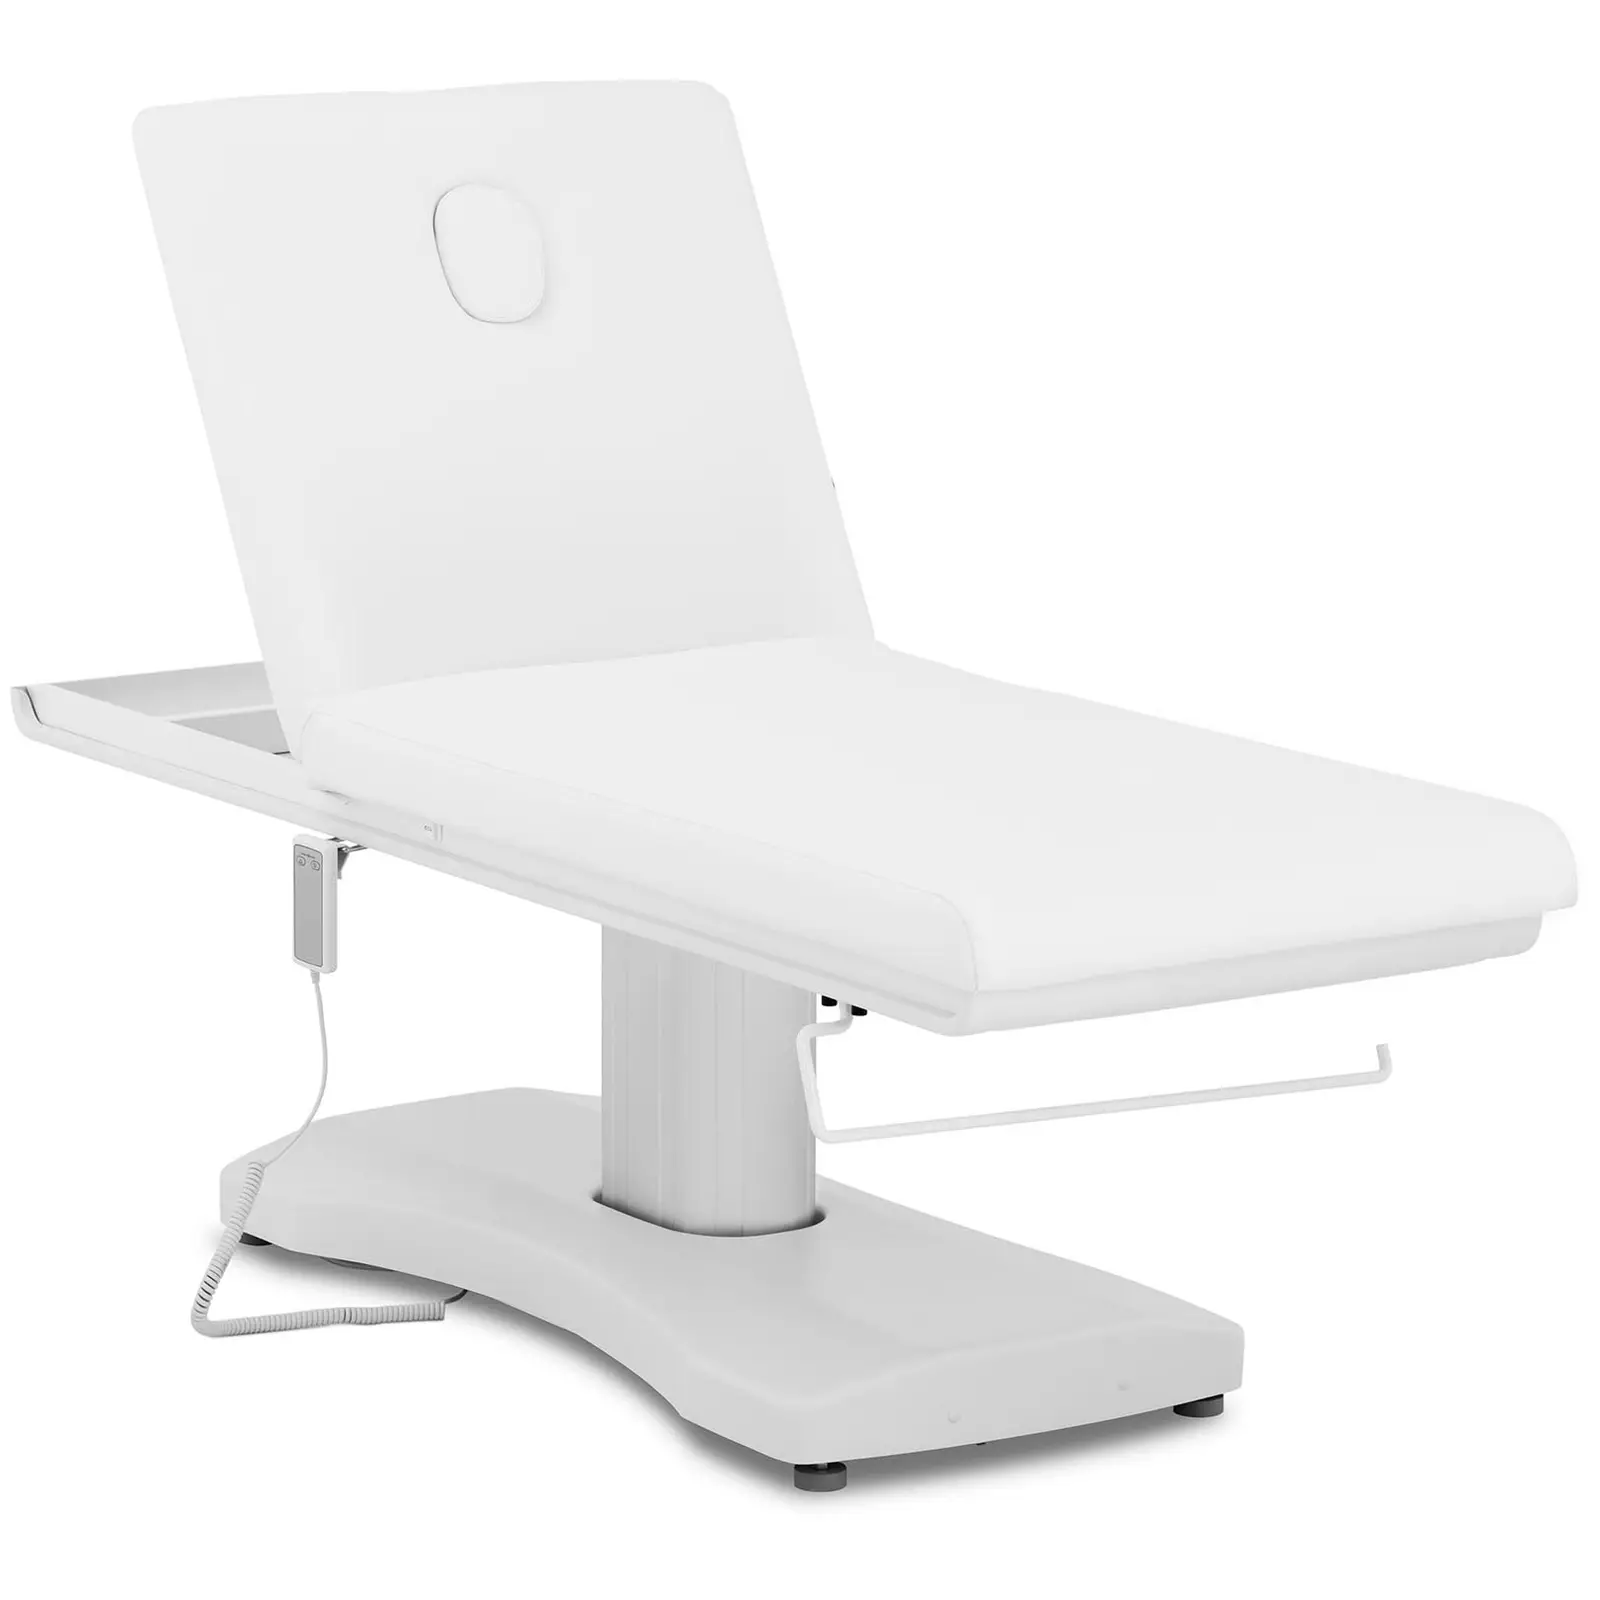 Electric Massage Table - 196 x 69 x 90 cm - 175 kg - White